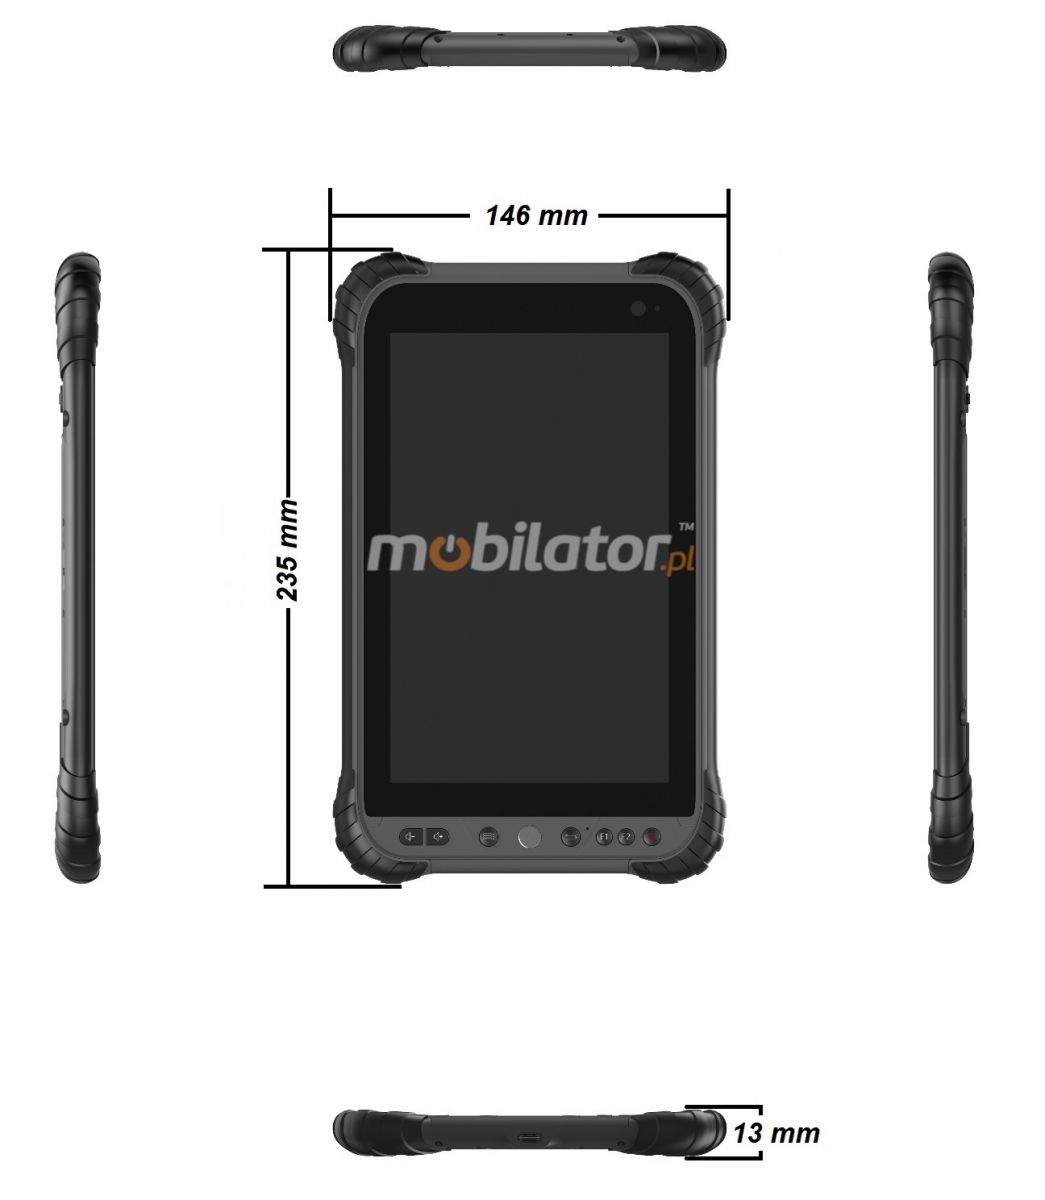 Odporny rugged tablet przemysowy Android 7.0 MobiPad TSS1011 NFC IP68 4G  IP68 mobilator  umpc